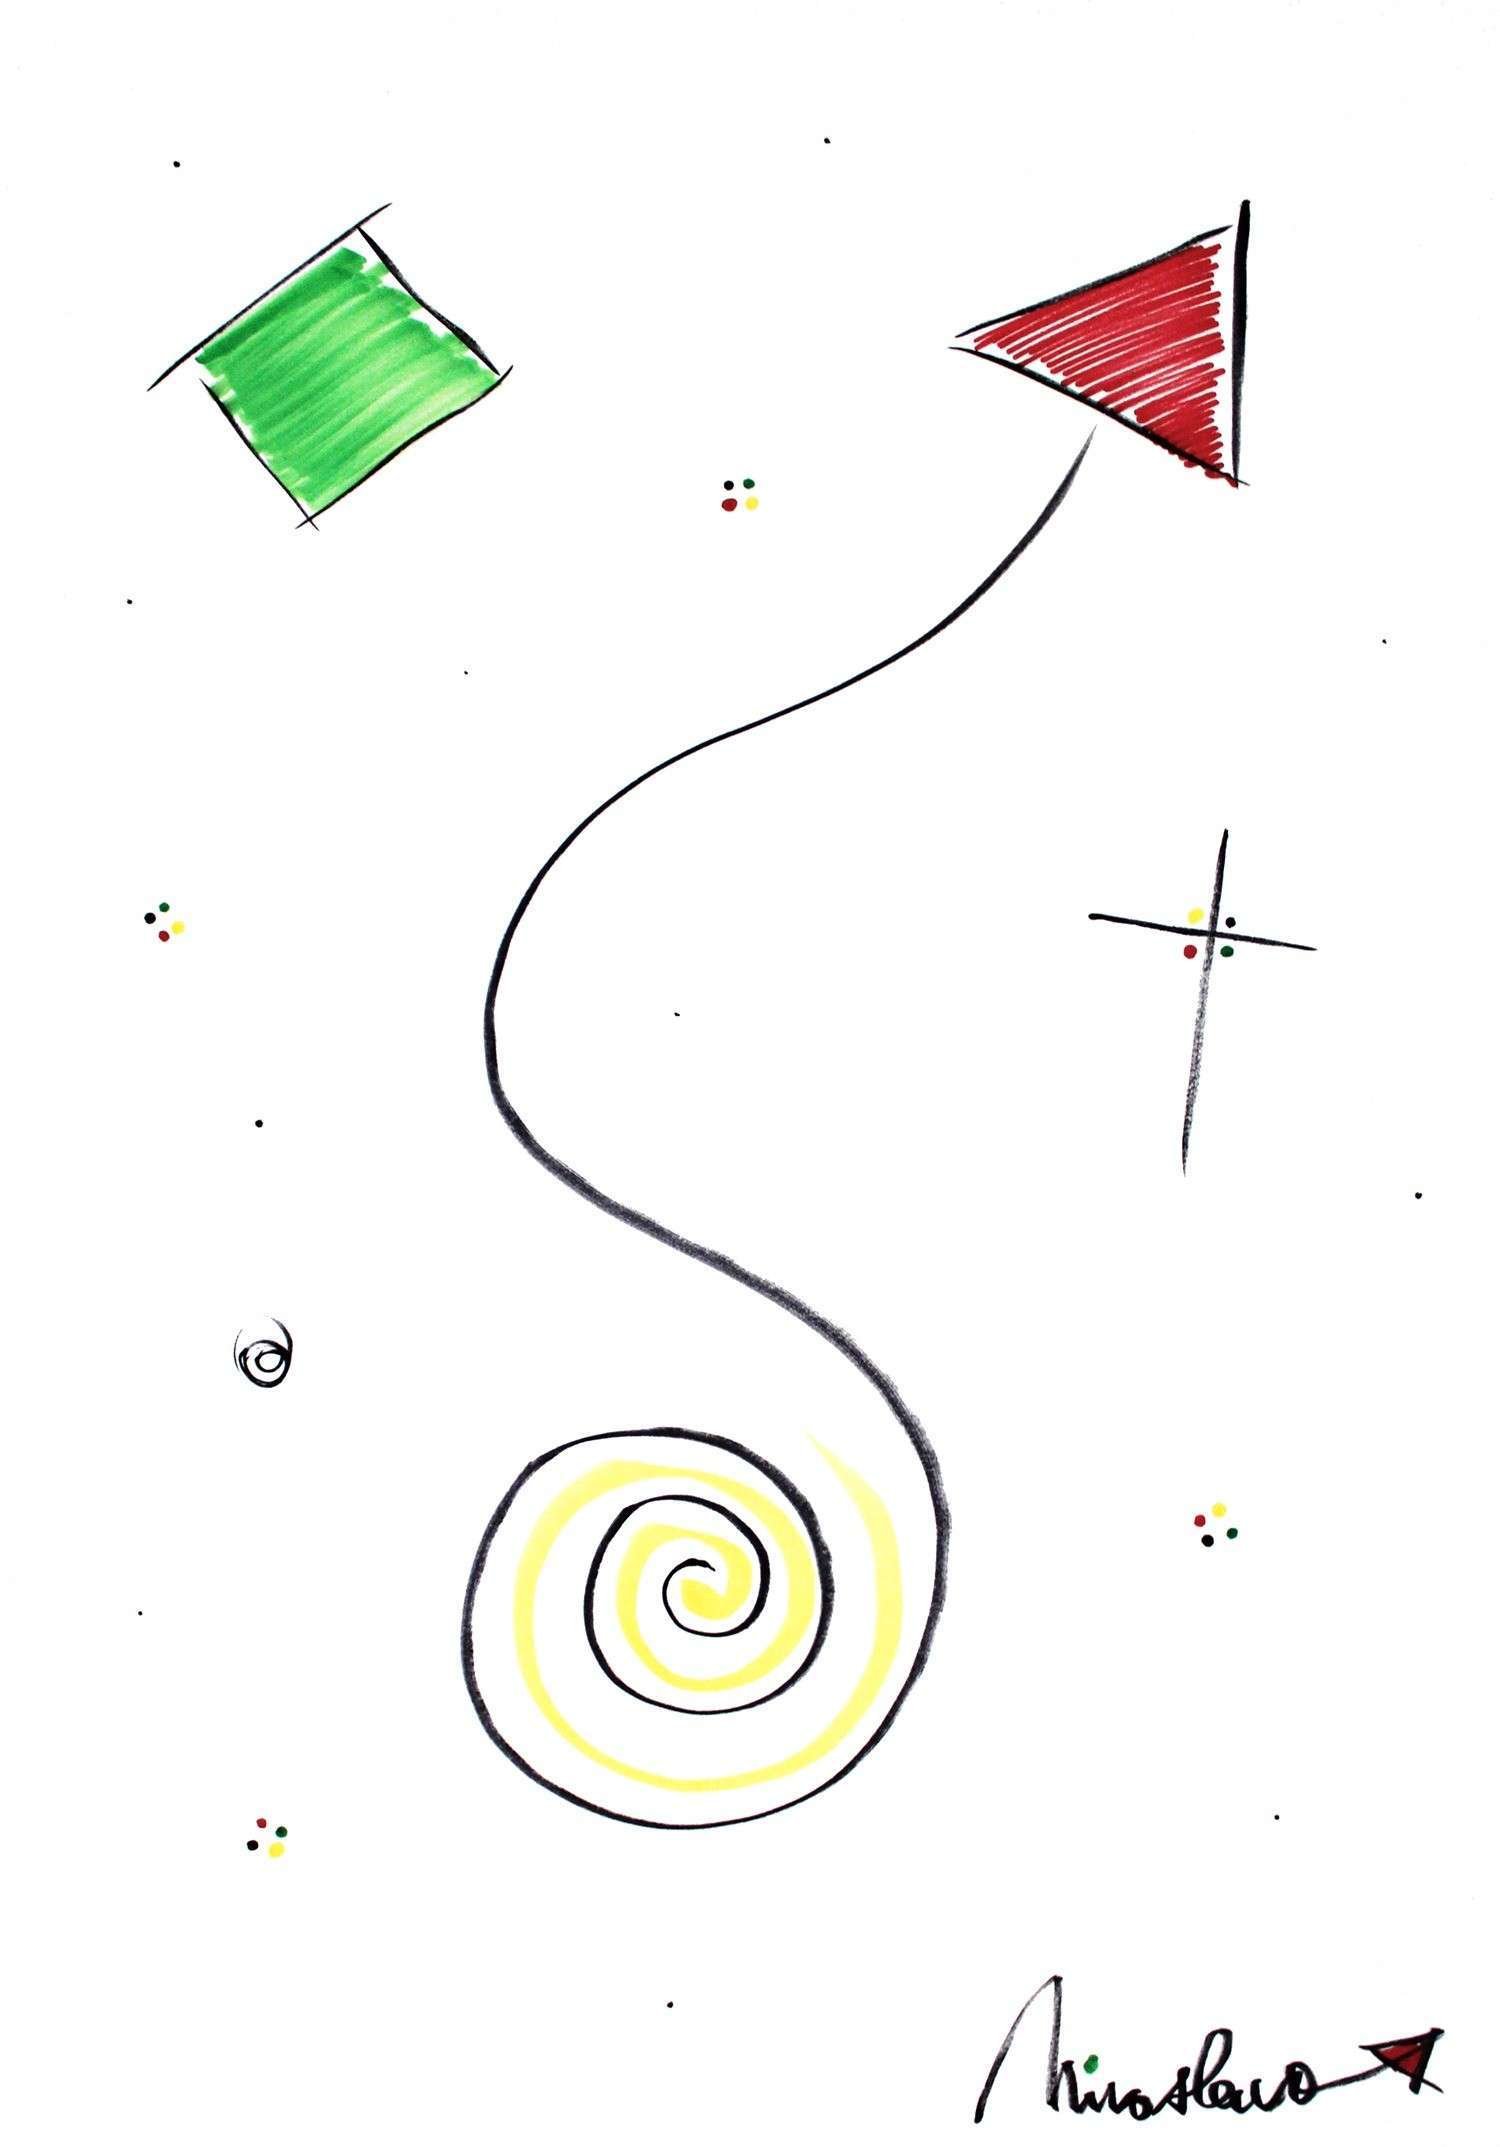 Miroslavo’s Drawings: Snailer